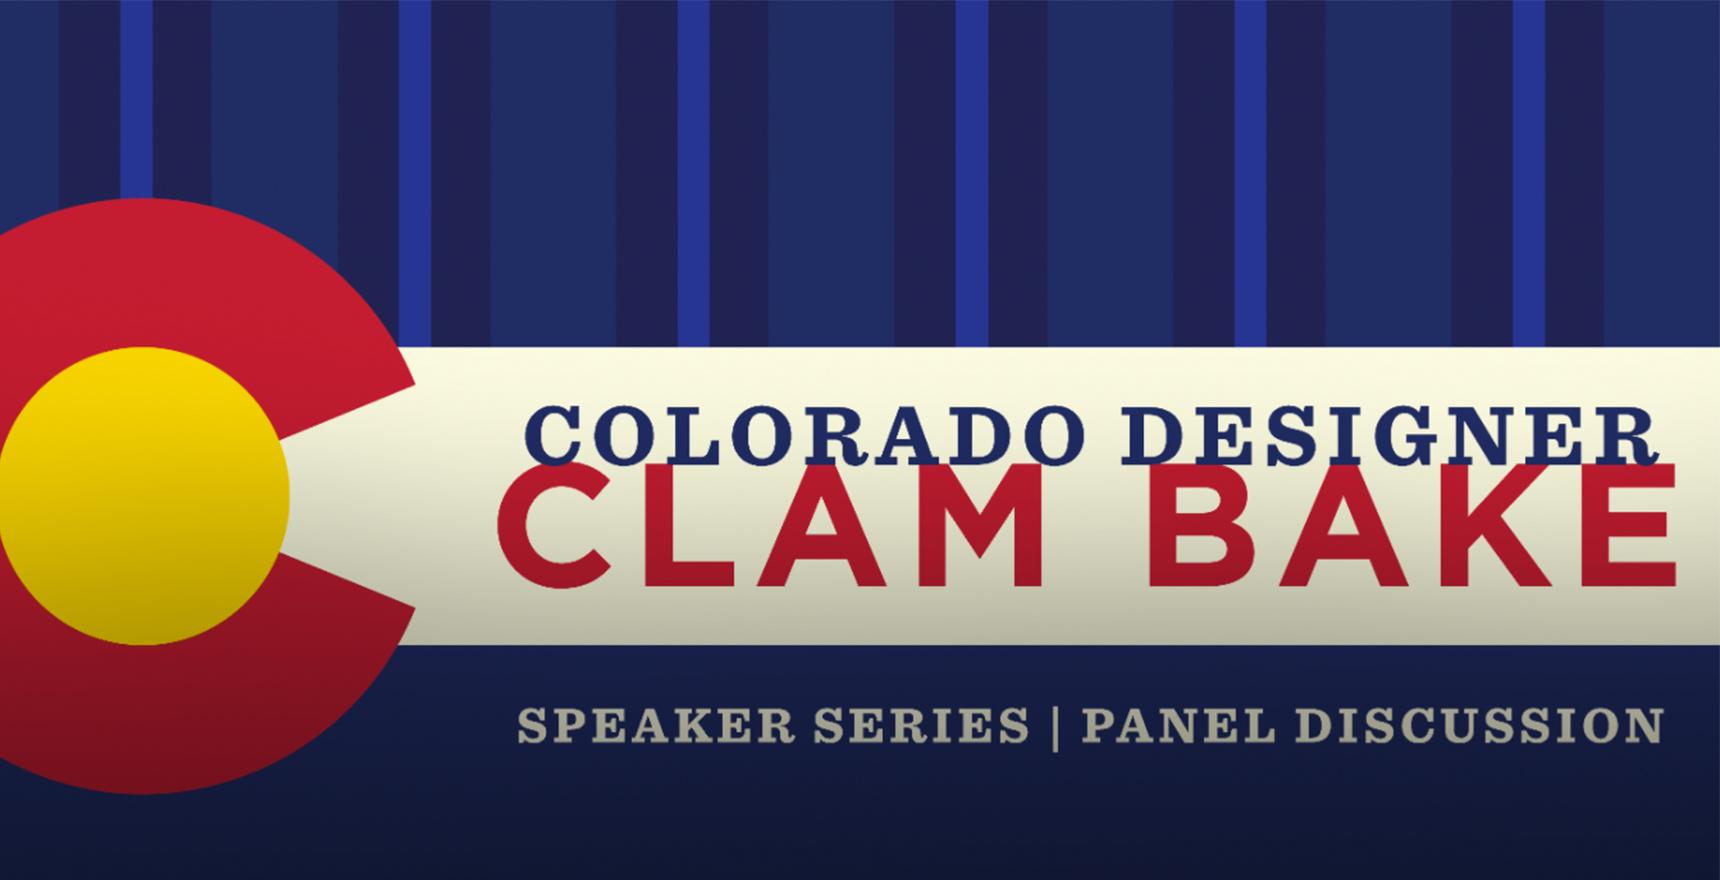 clam bake speaker series graphic